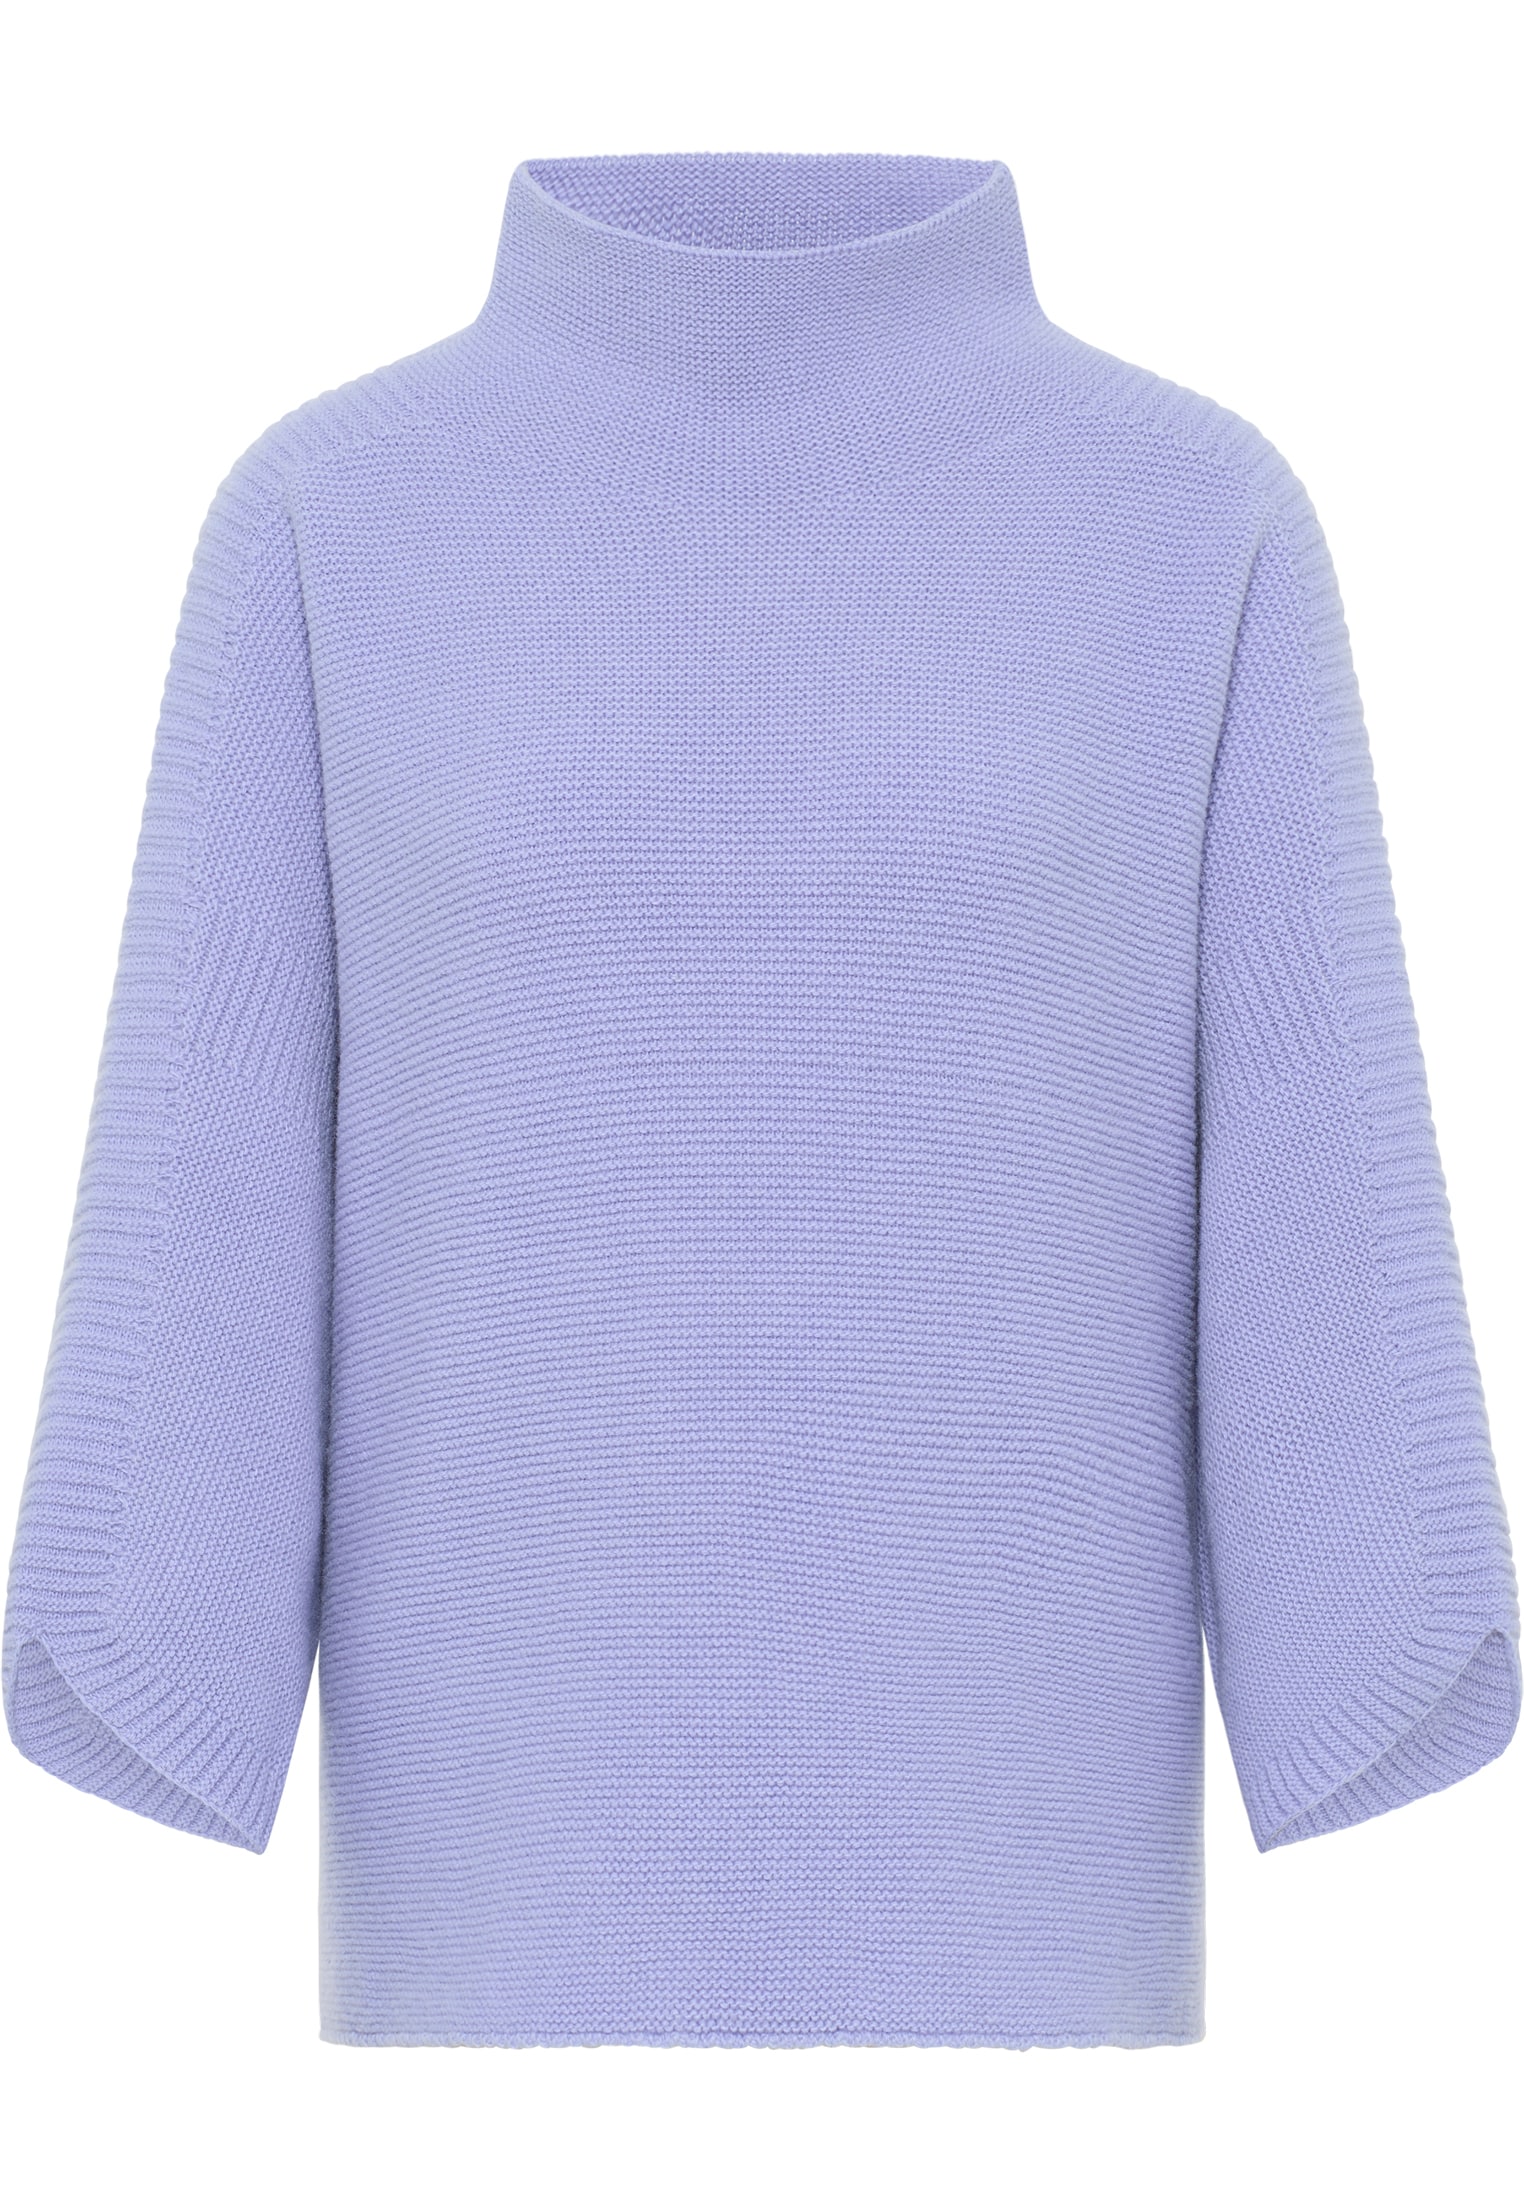 Knitted jumper in sky blue plain